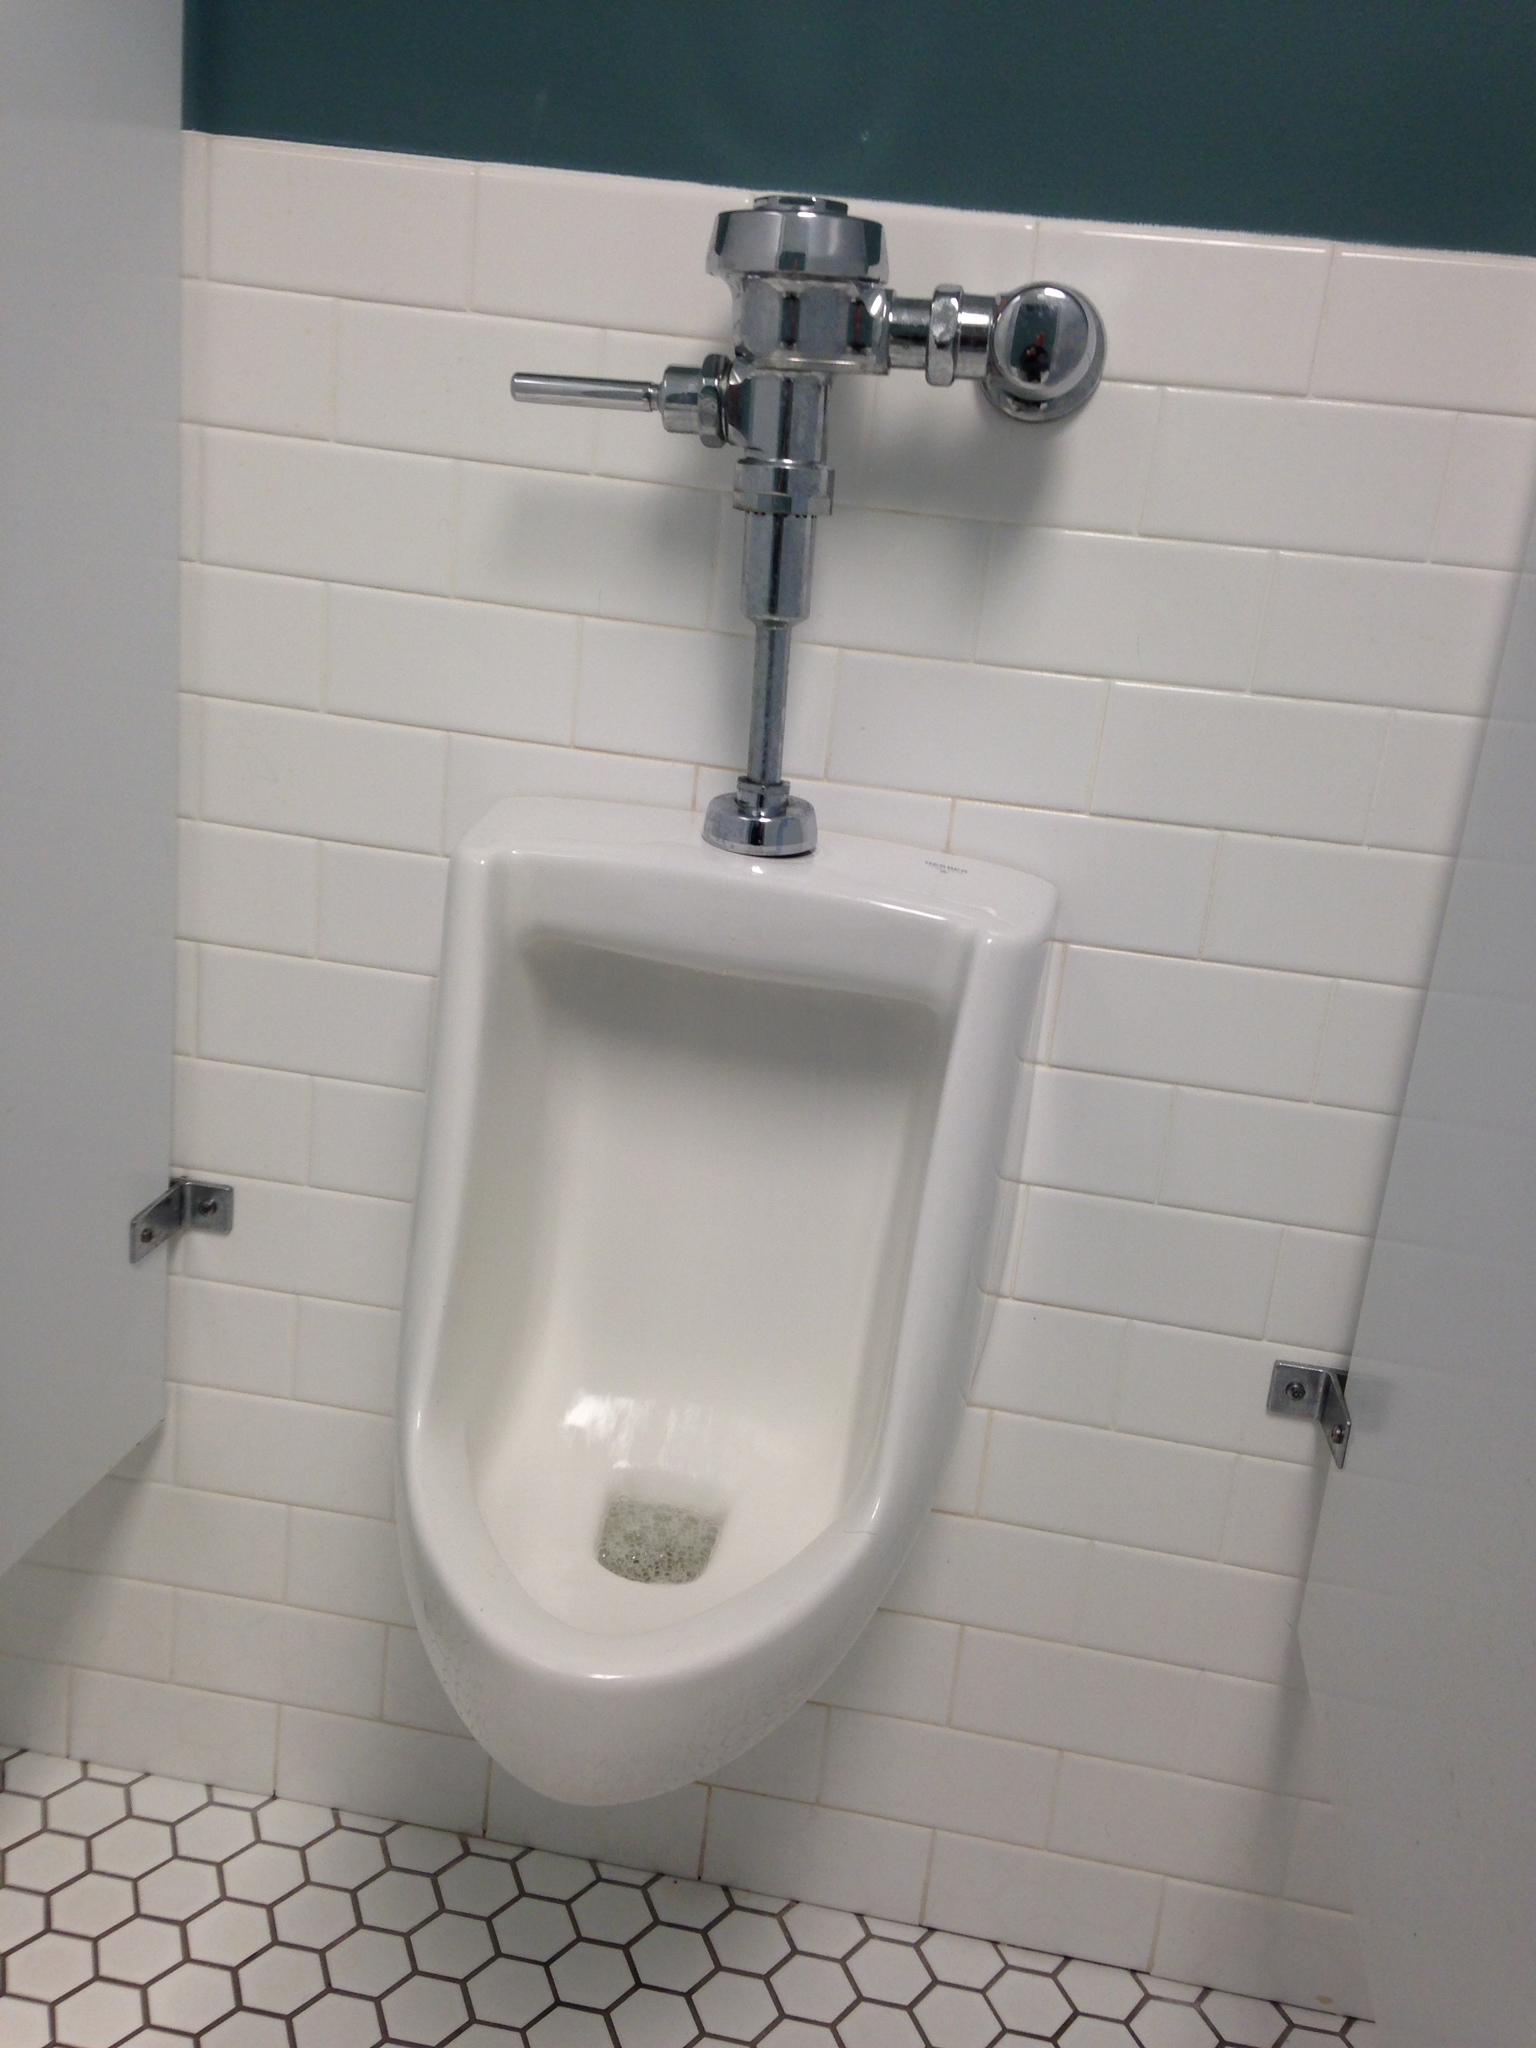 File Bathroom Urinal Wikimedia Commons